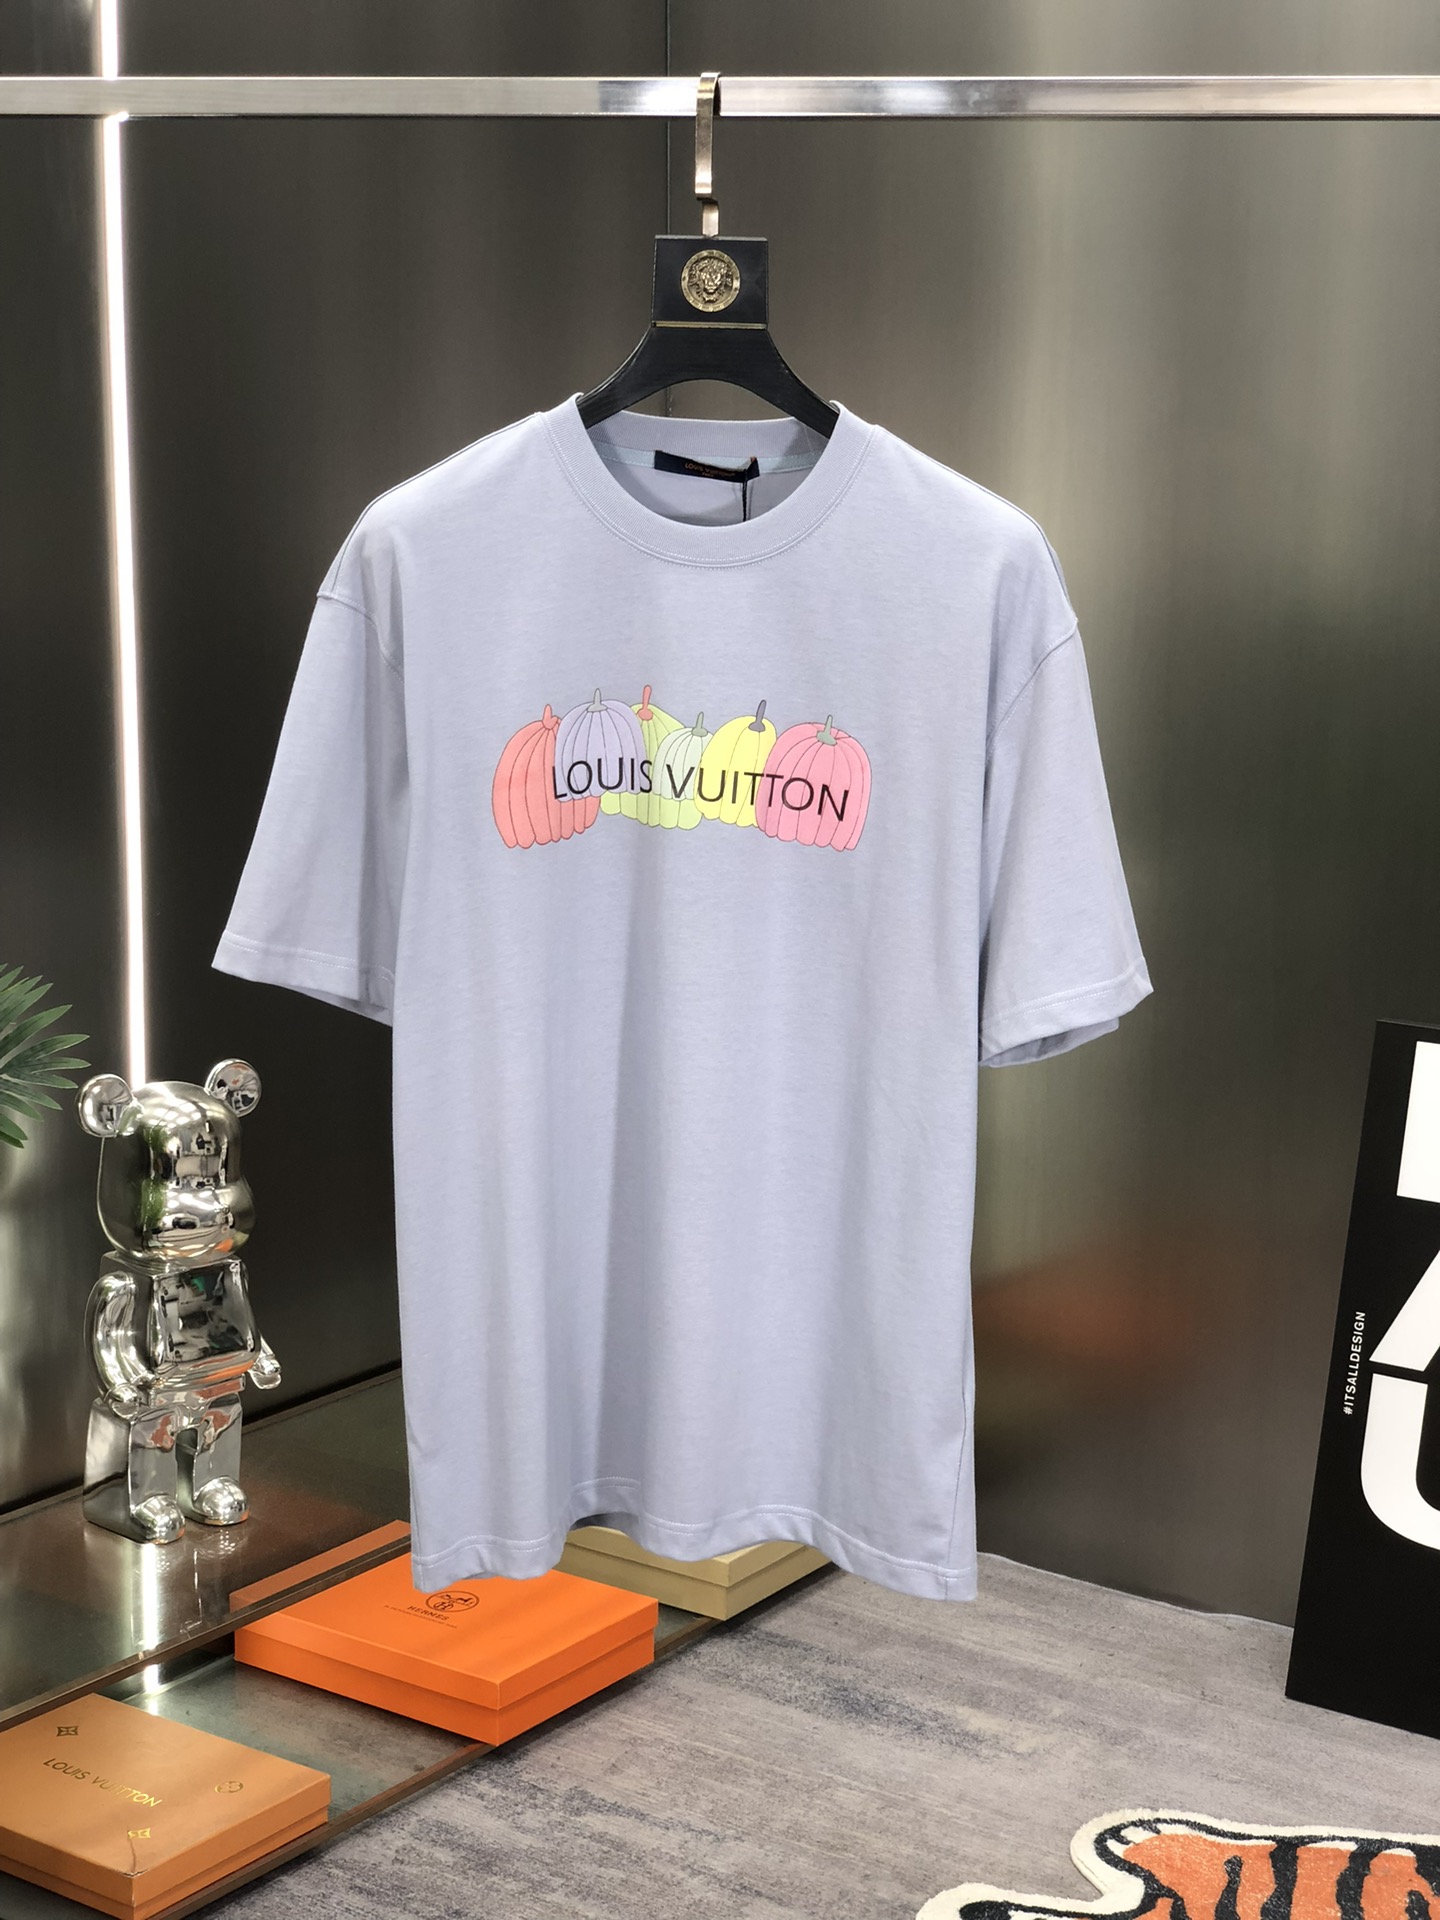 Louis Vuitton Clothing T-Shirt Printing Unisex Cotton